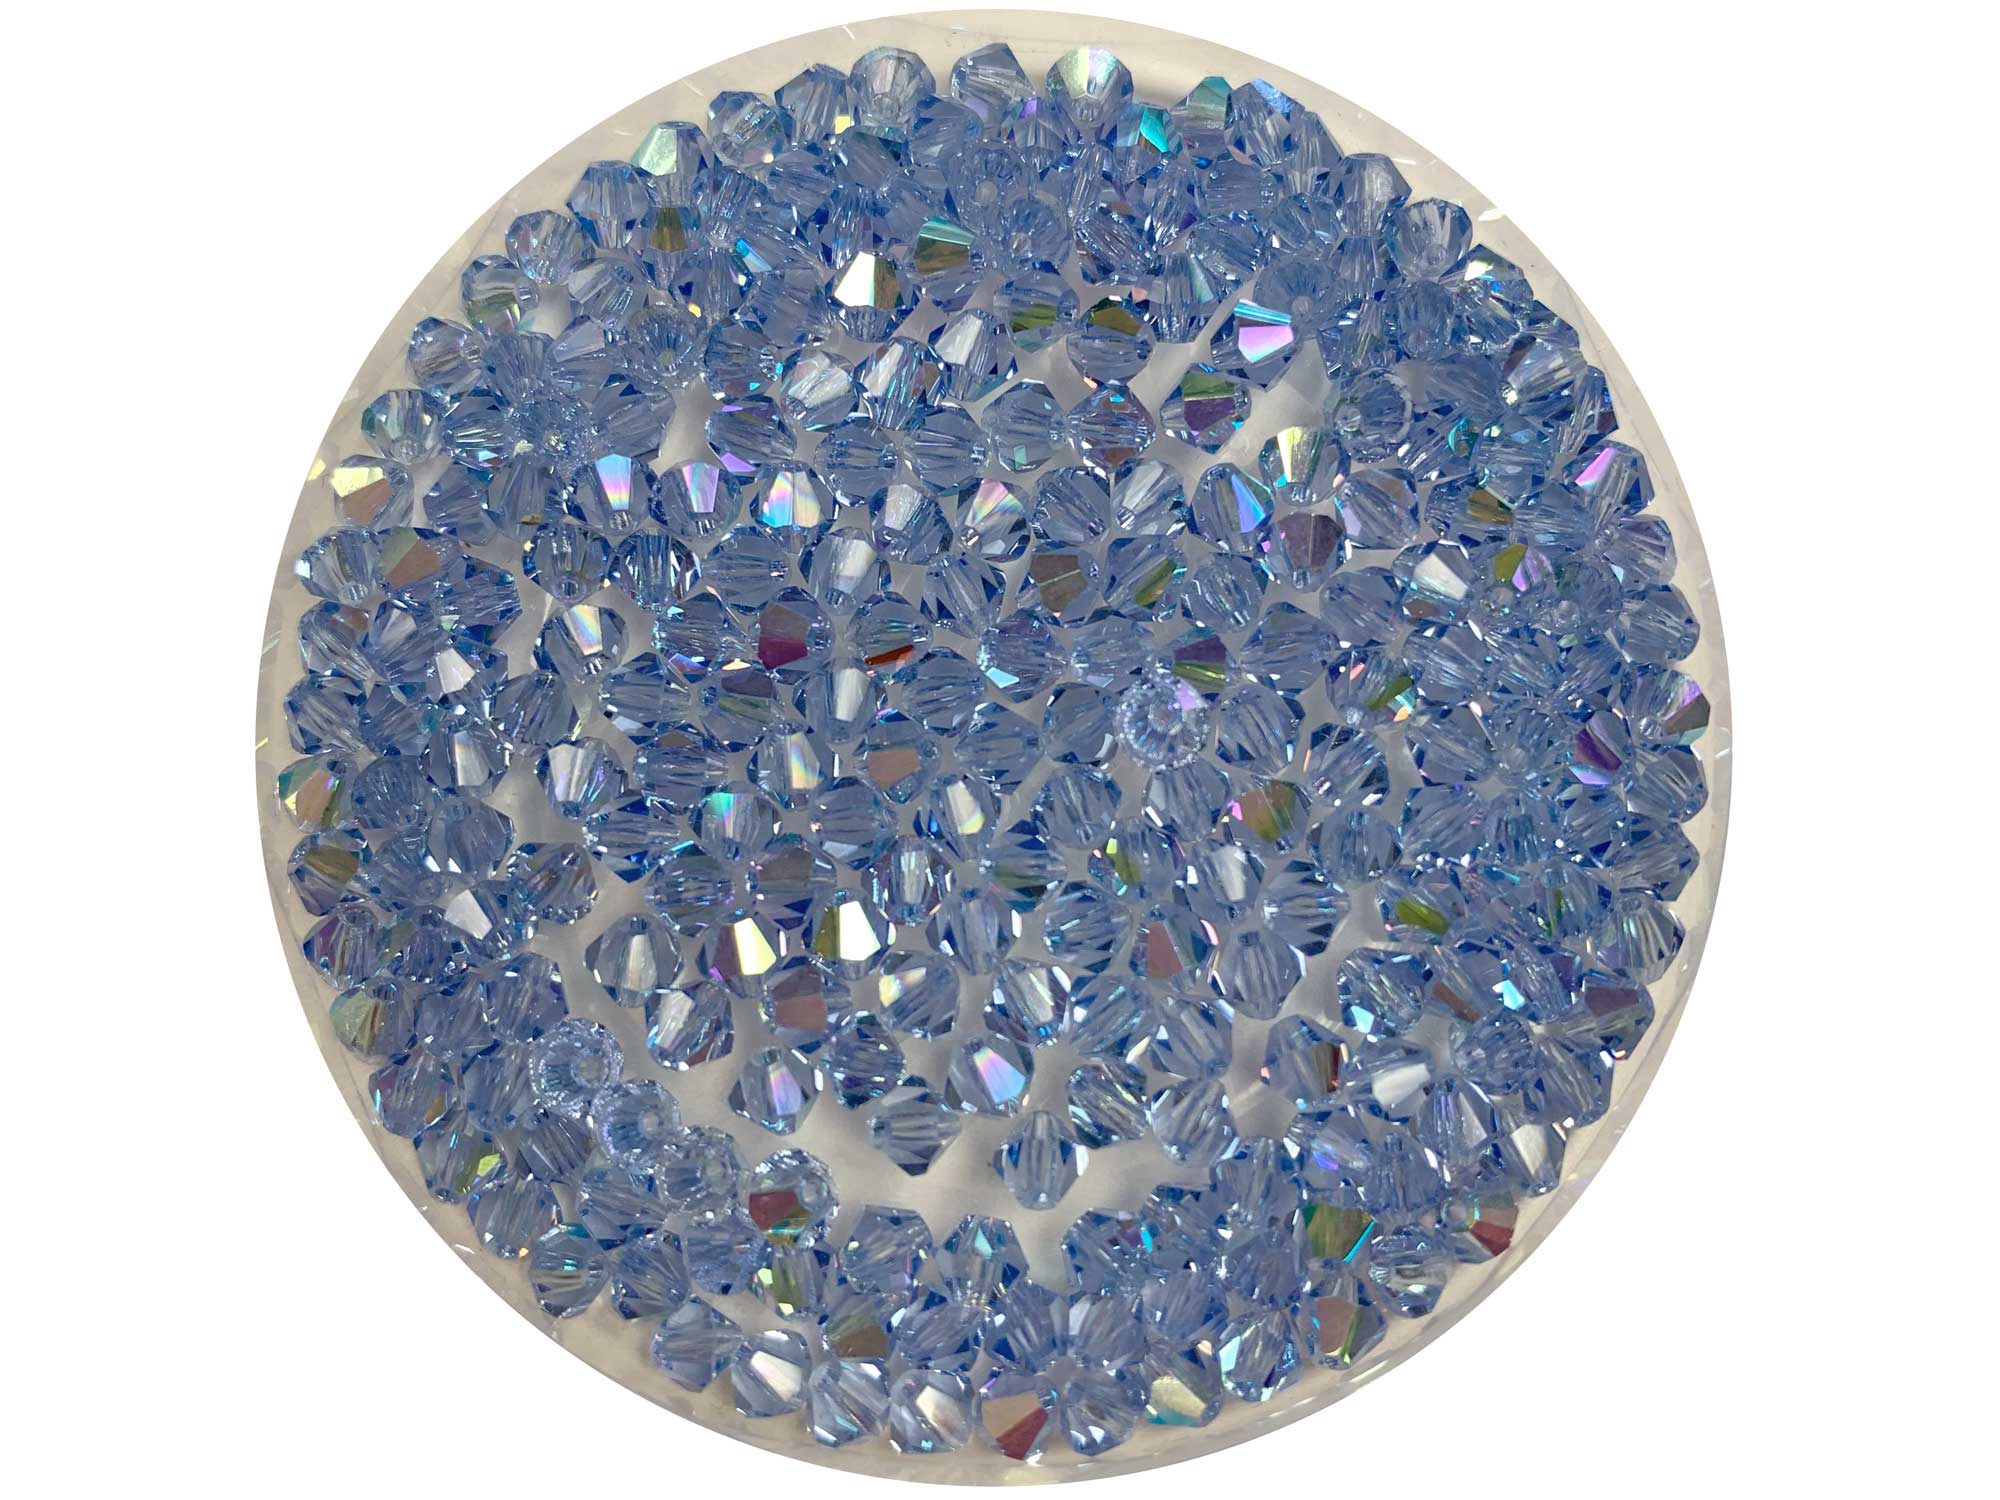 Light Sapphire AB, Czech Glass Beads, Machine Cut Bicones (MC Rondell, Diamond Shape), light blue crystals coated with Aurora Borealis